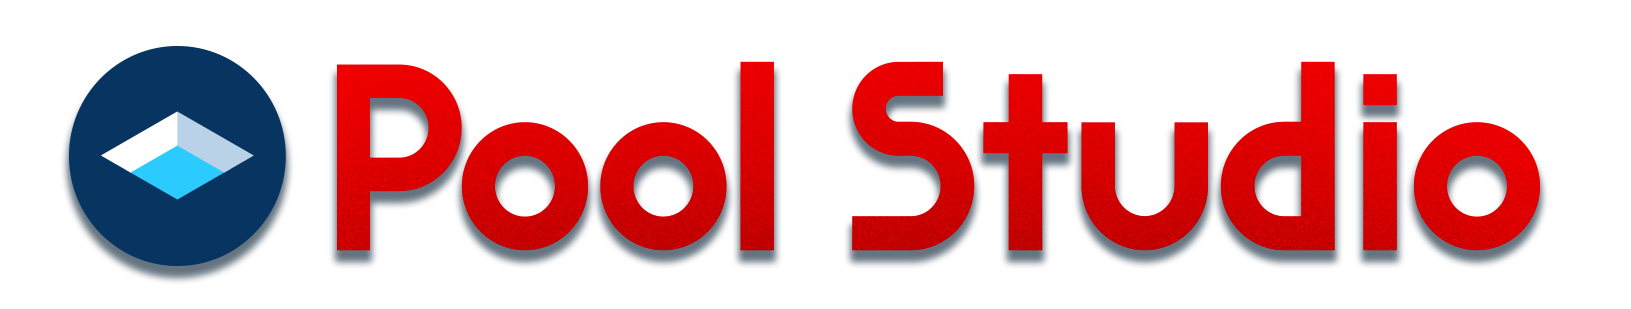 PoolStudio-Logo-DropShadow